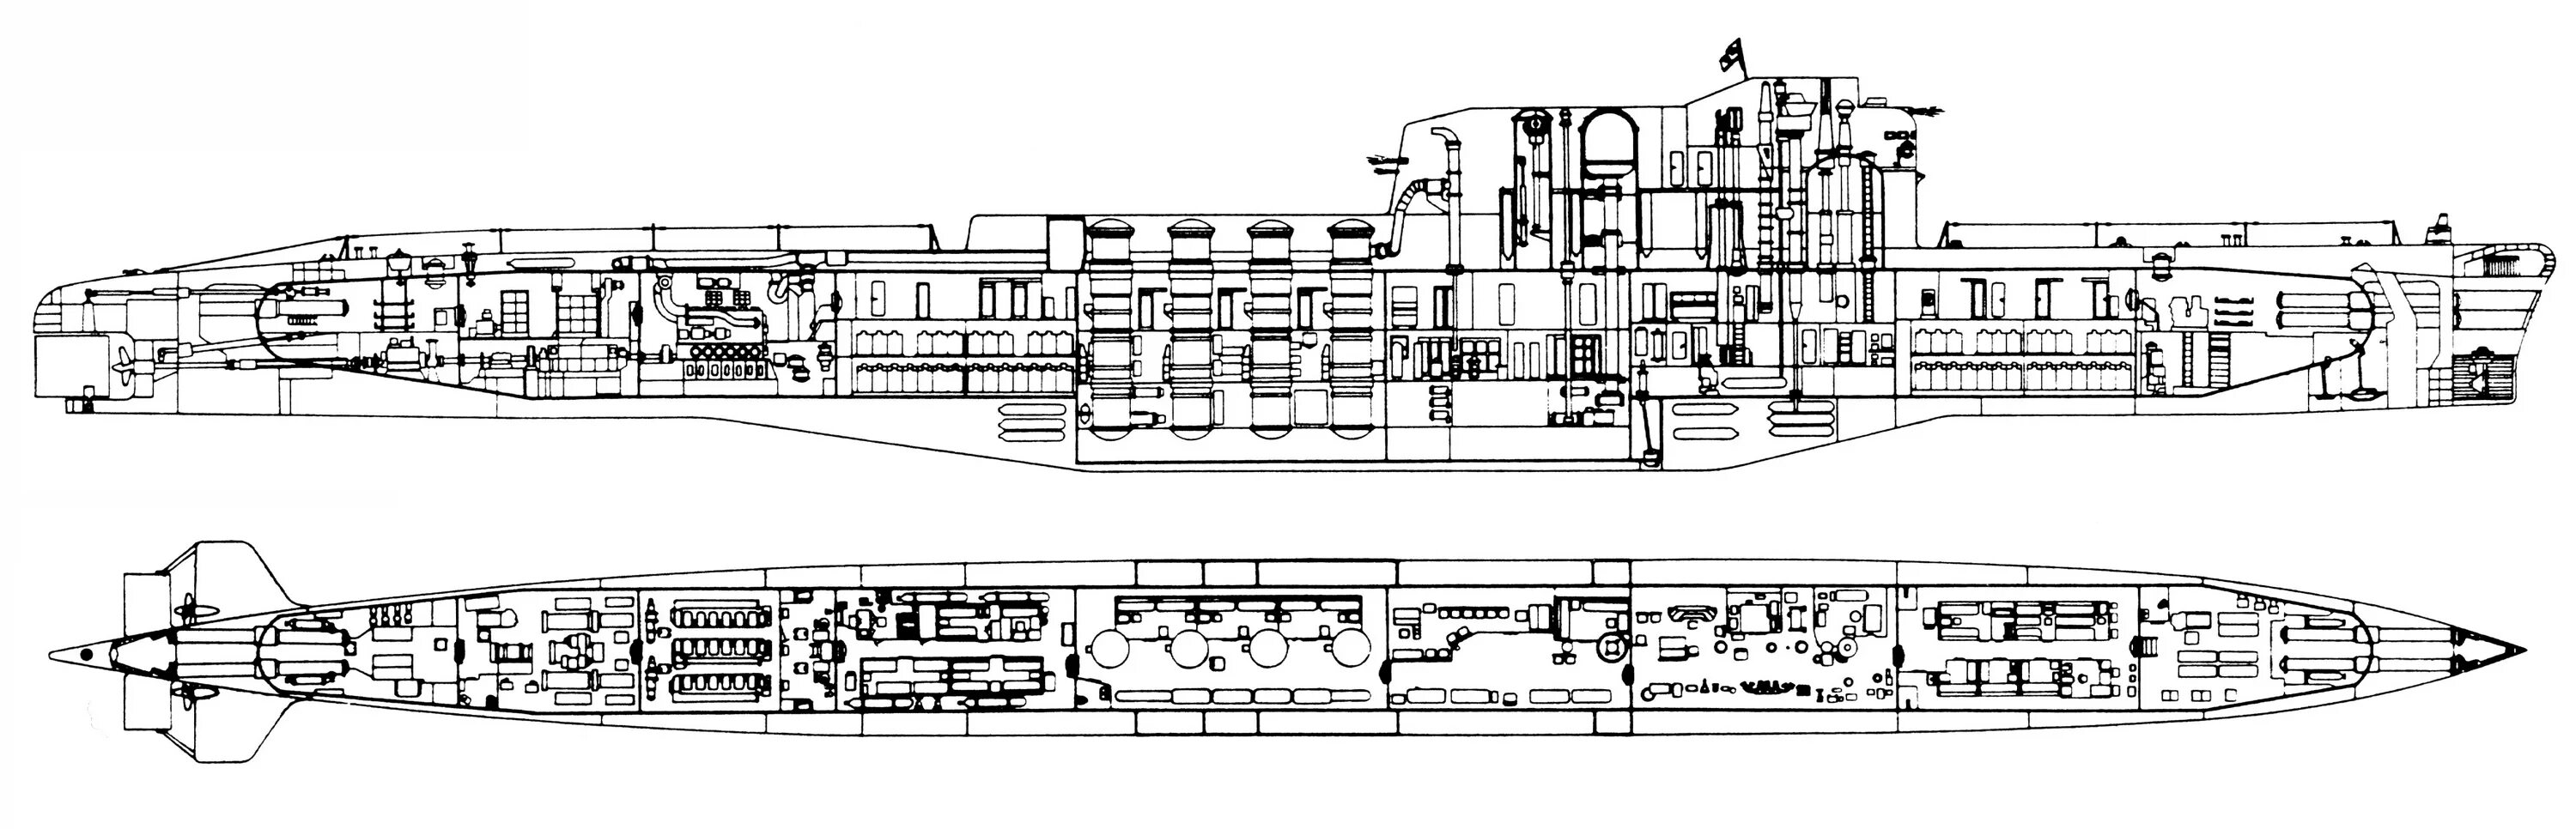 Проект 1123 Кондор чертежи. Пл пр 641 чертежи. Подводная лодка проект 629 БС 107. Подводная лодка проекта 641 схема. Пл чо шп онаж